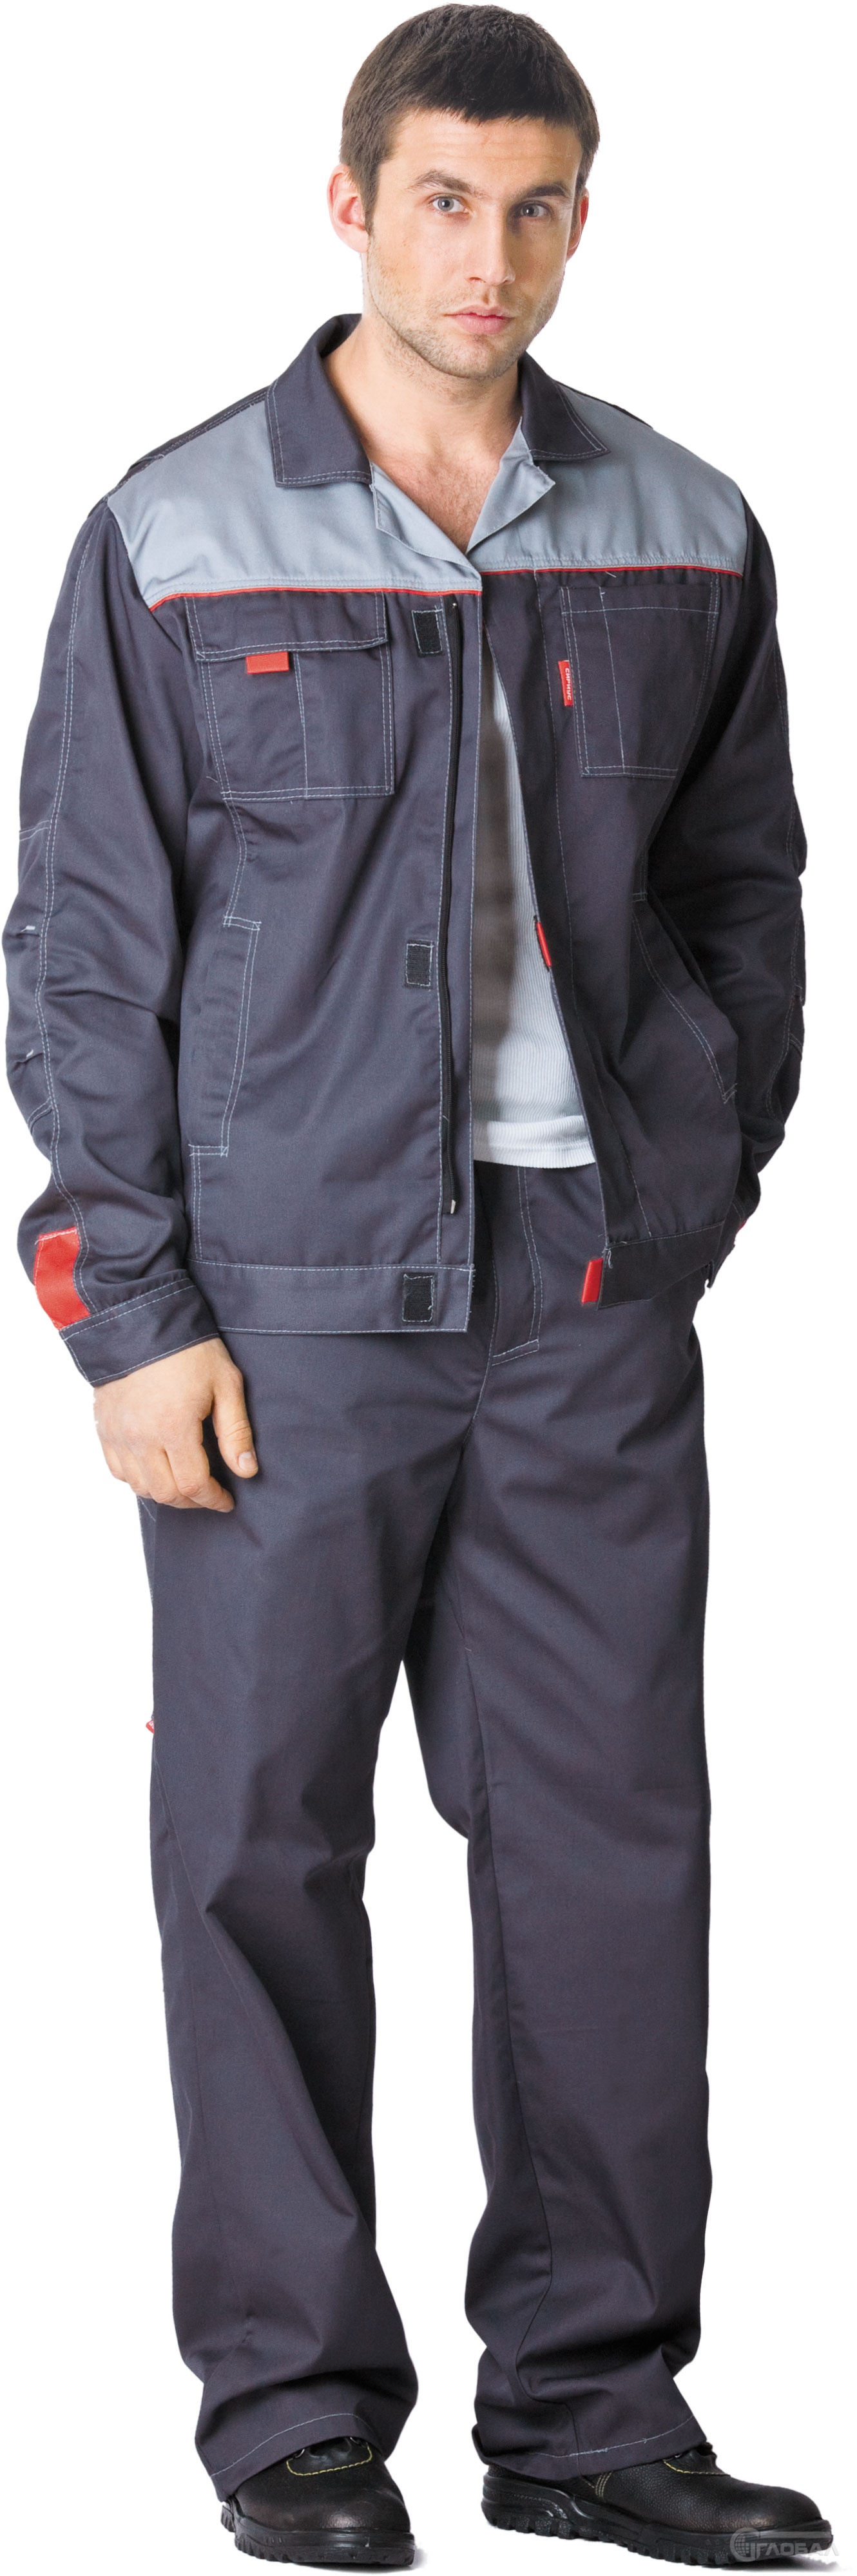 Костюм «ФАВОРИТНЫЙ-1» (куртка и брюки), ткань «Твил», цвет тёмно-серый + серый. Фото №2